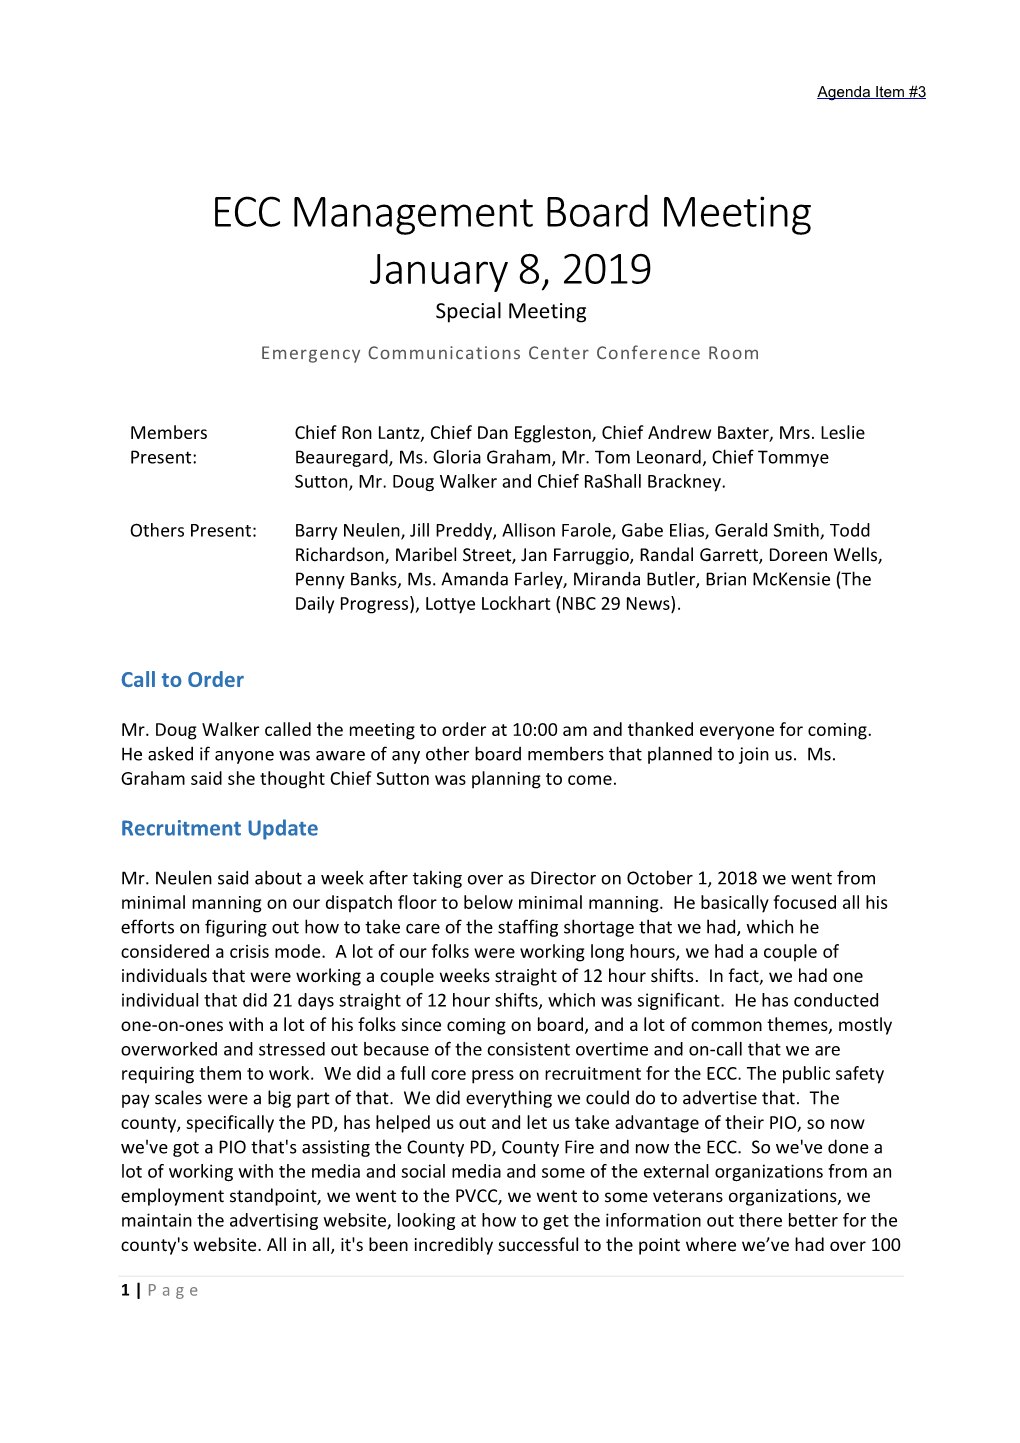 ECC Management Board Meeting January 8, 2019 Special Meeting